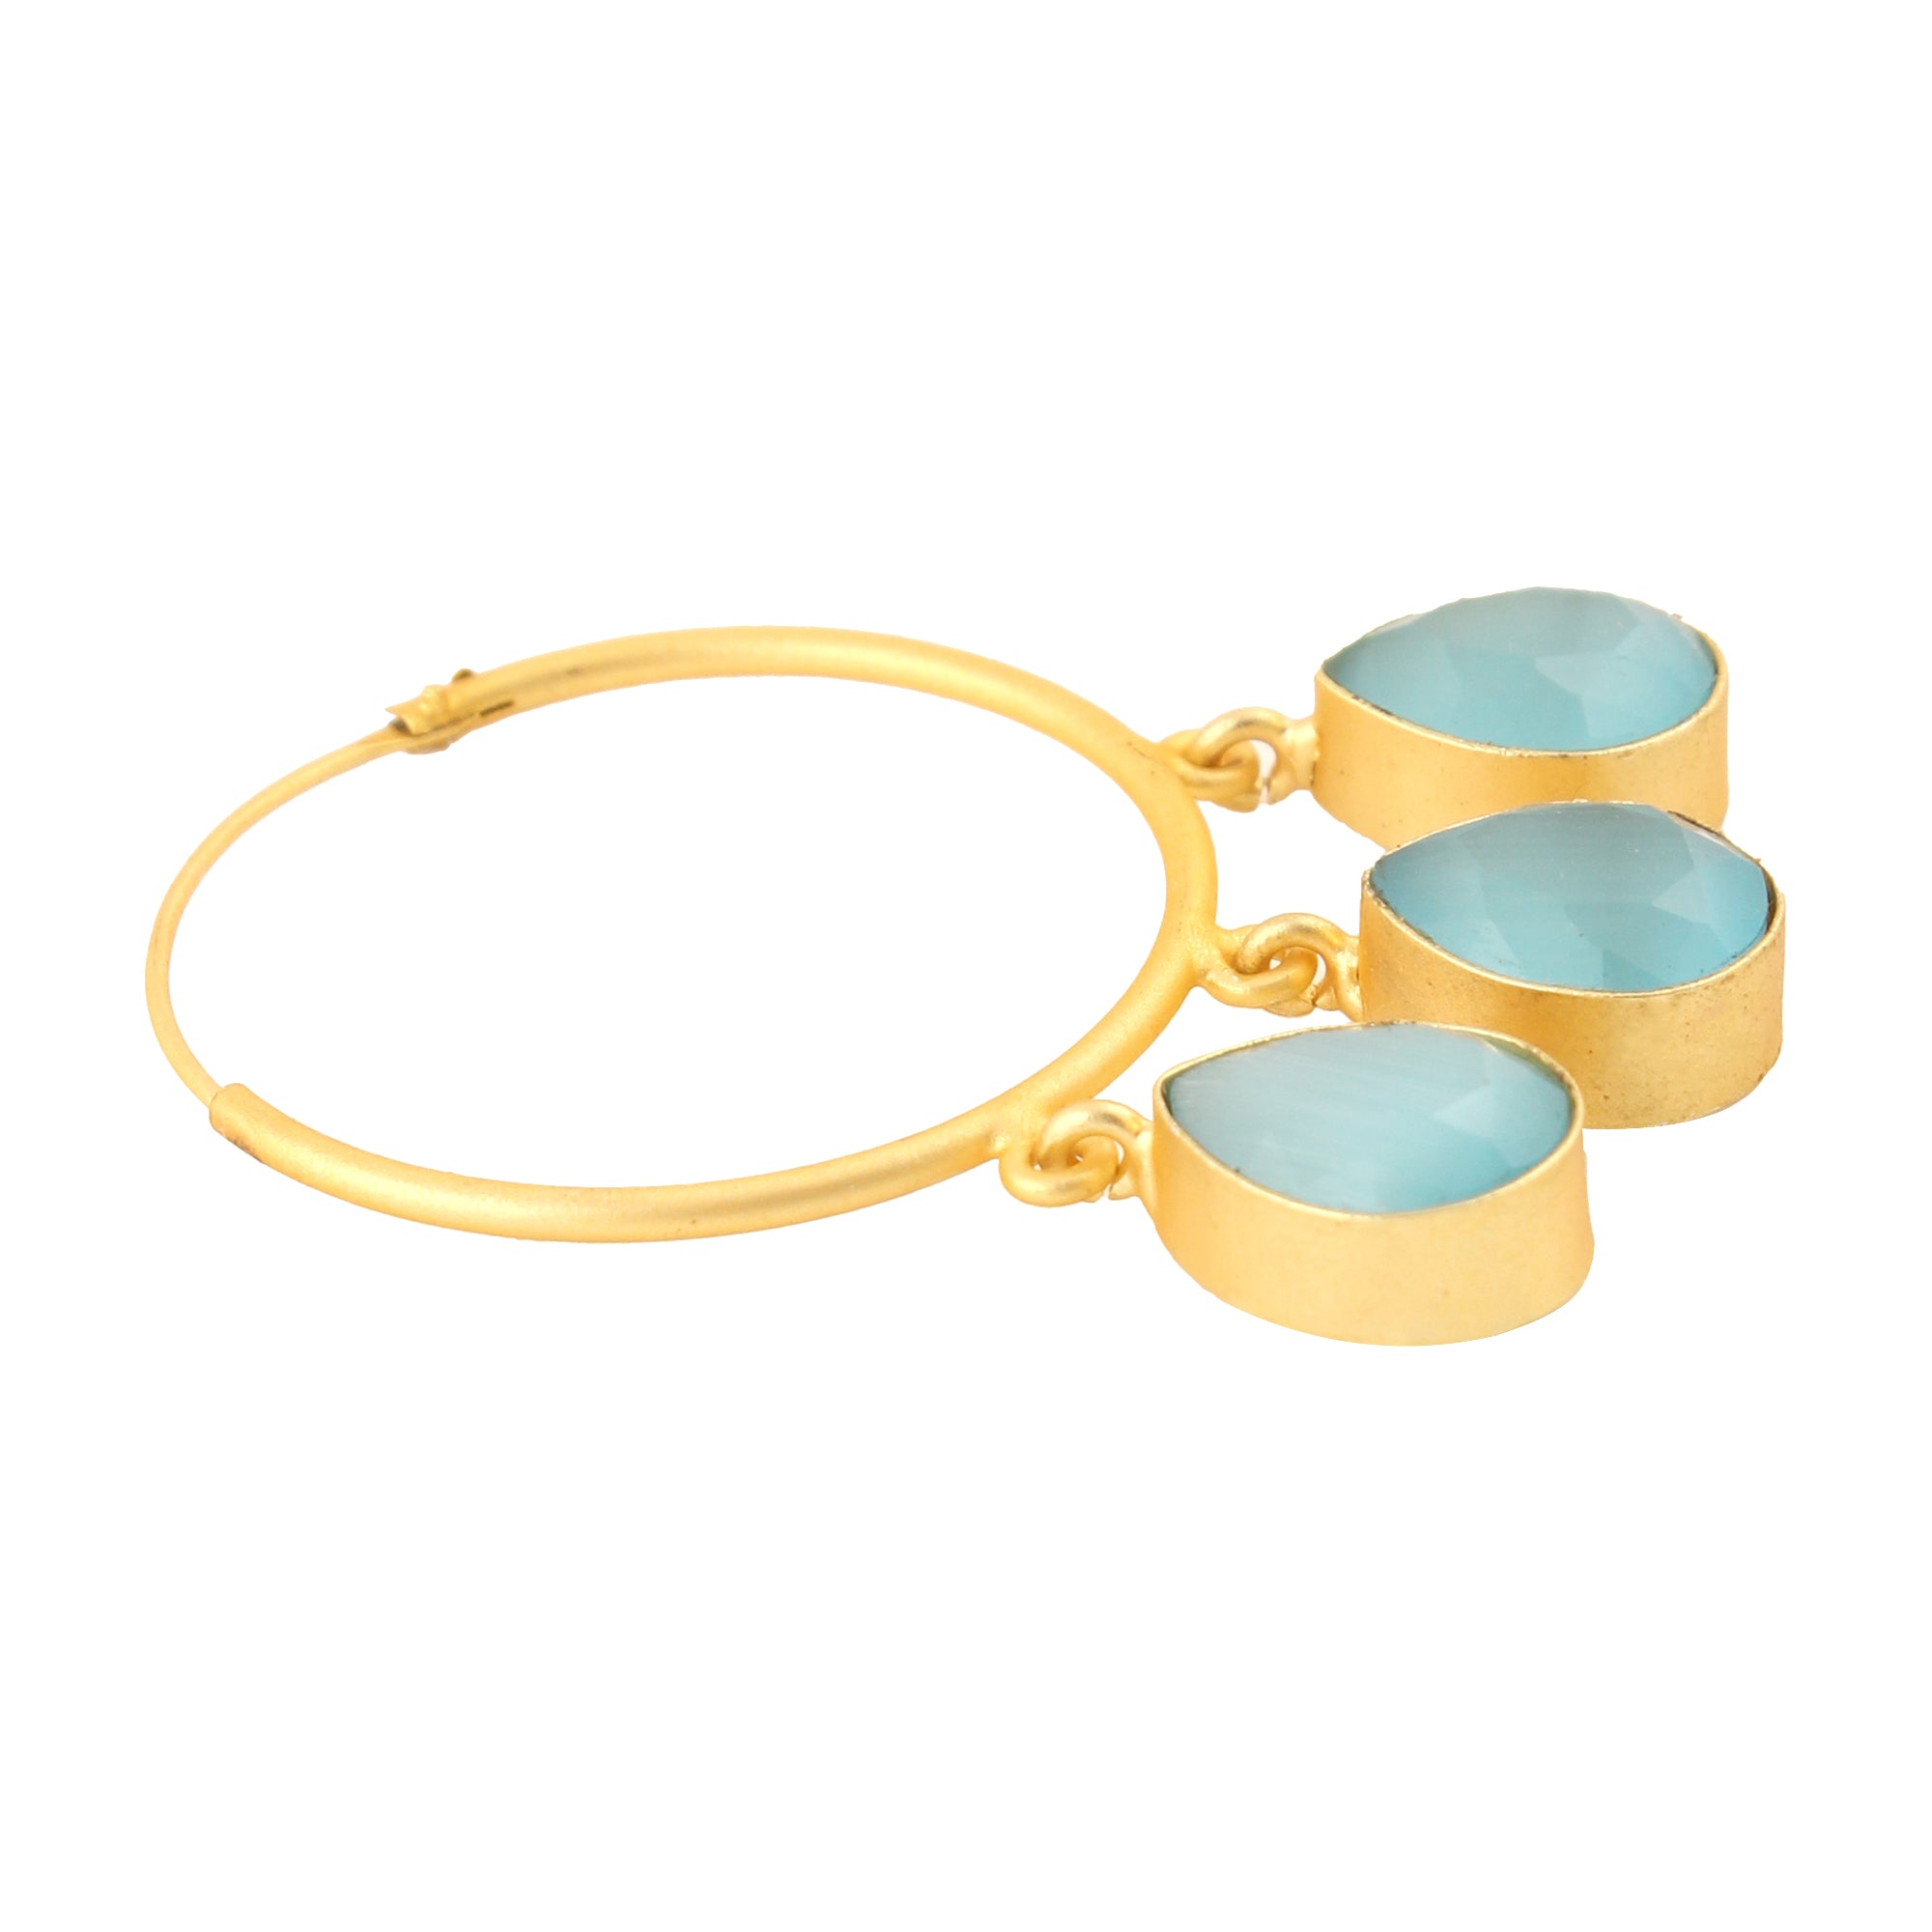 Women's Contemporary Gold Hoop Earrings - Femizen